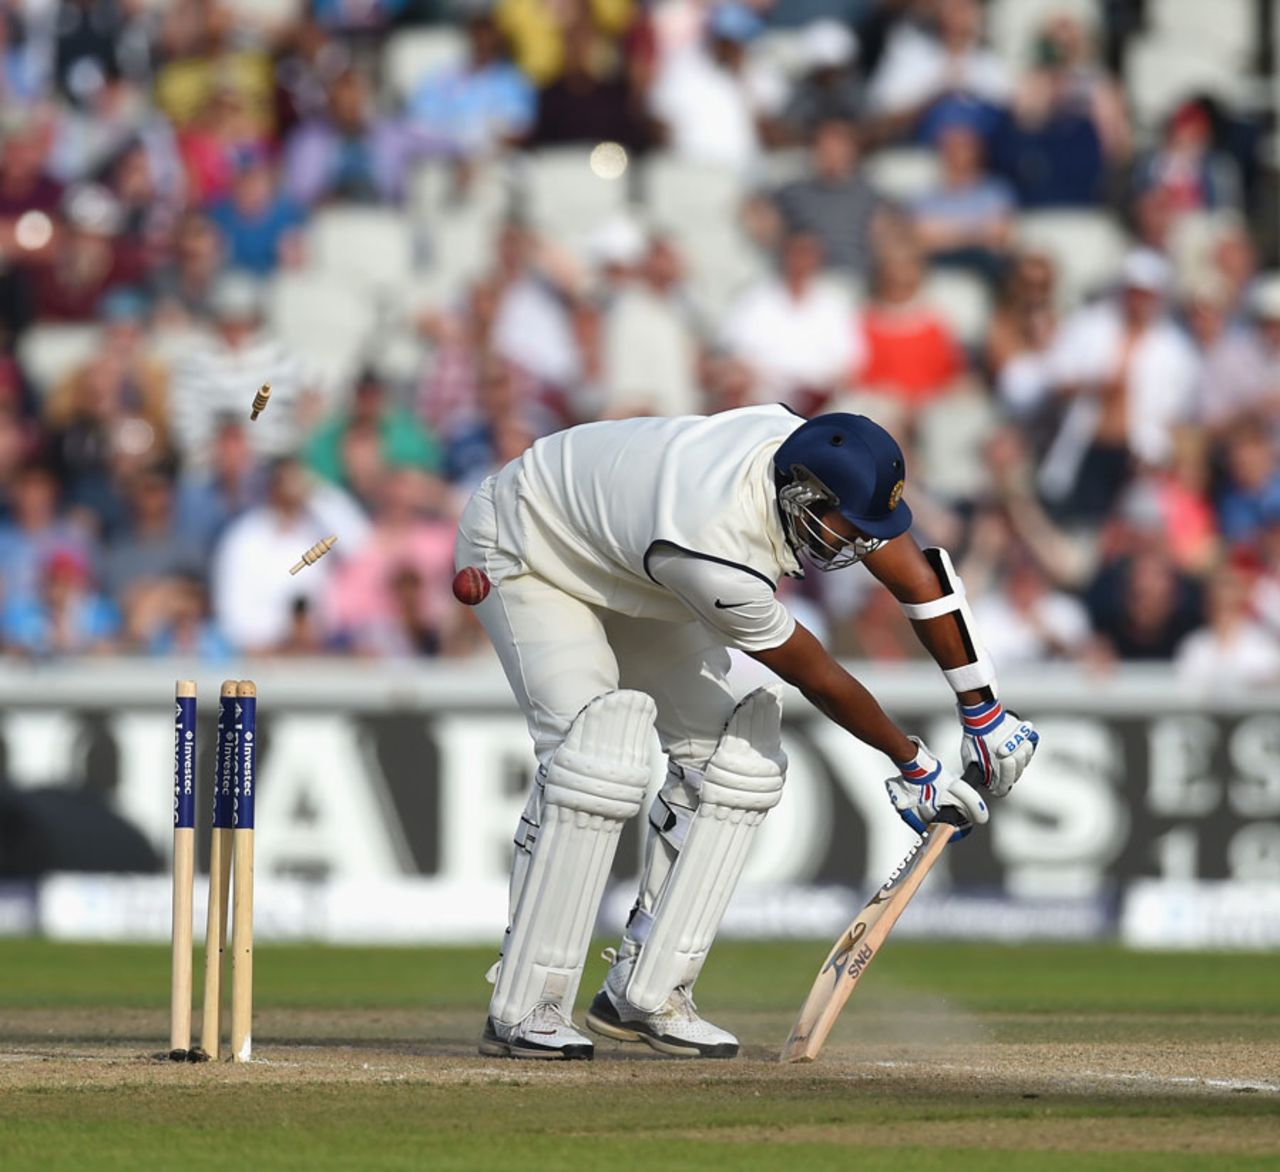 Pankaj Singh is bowled, England v India, 4th Test, Old Trafford, 3rd day, August 9, 2014